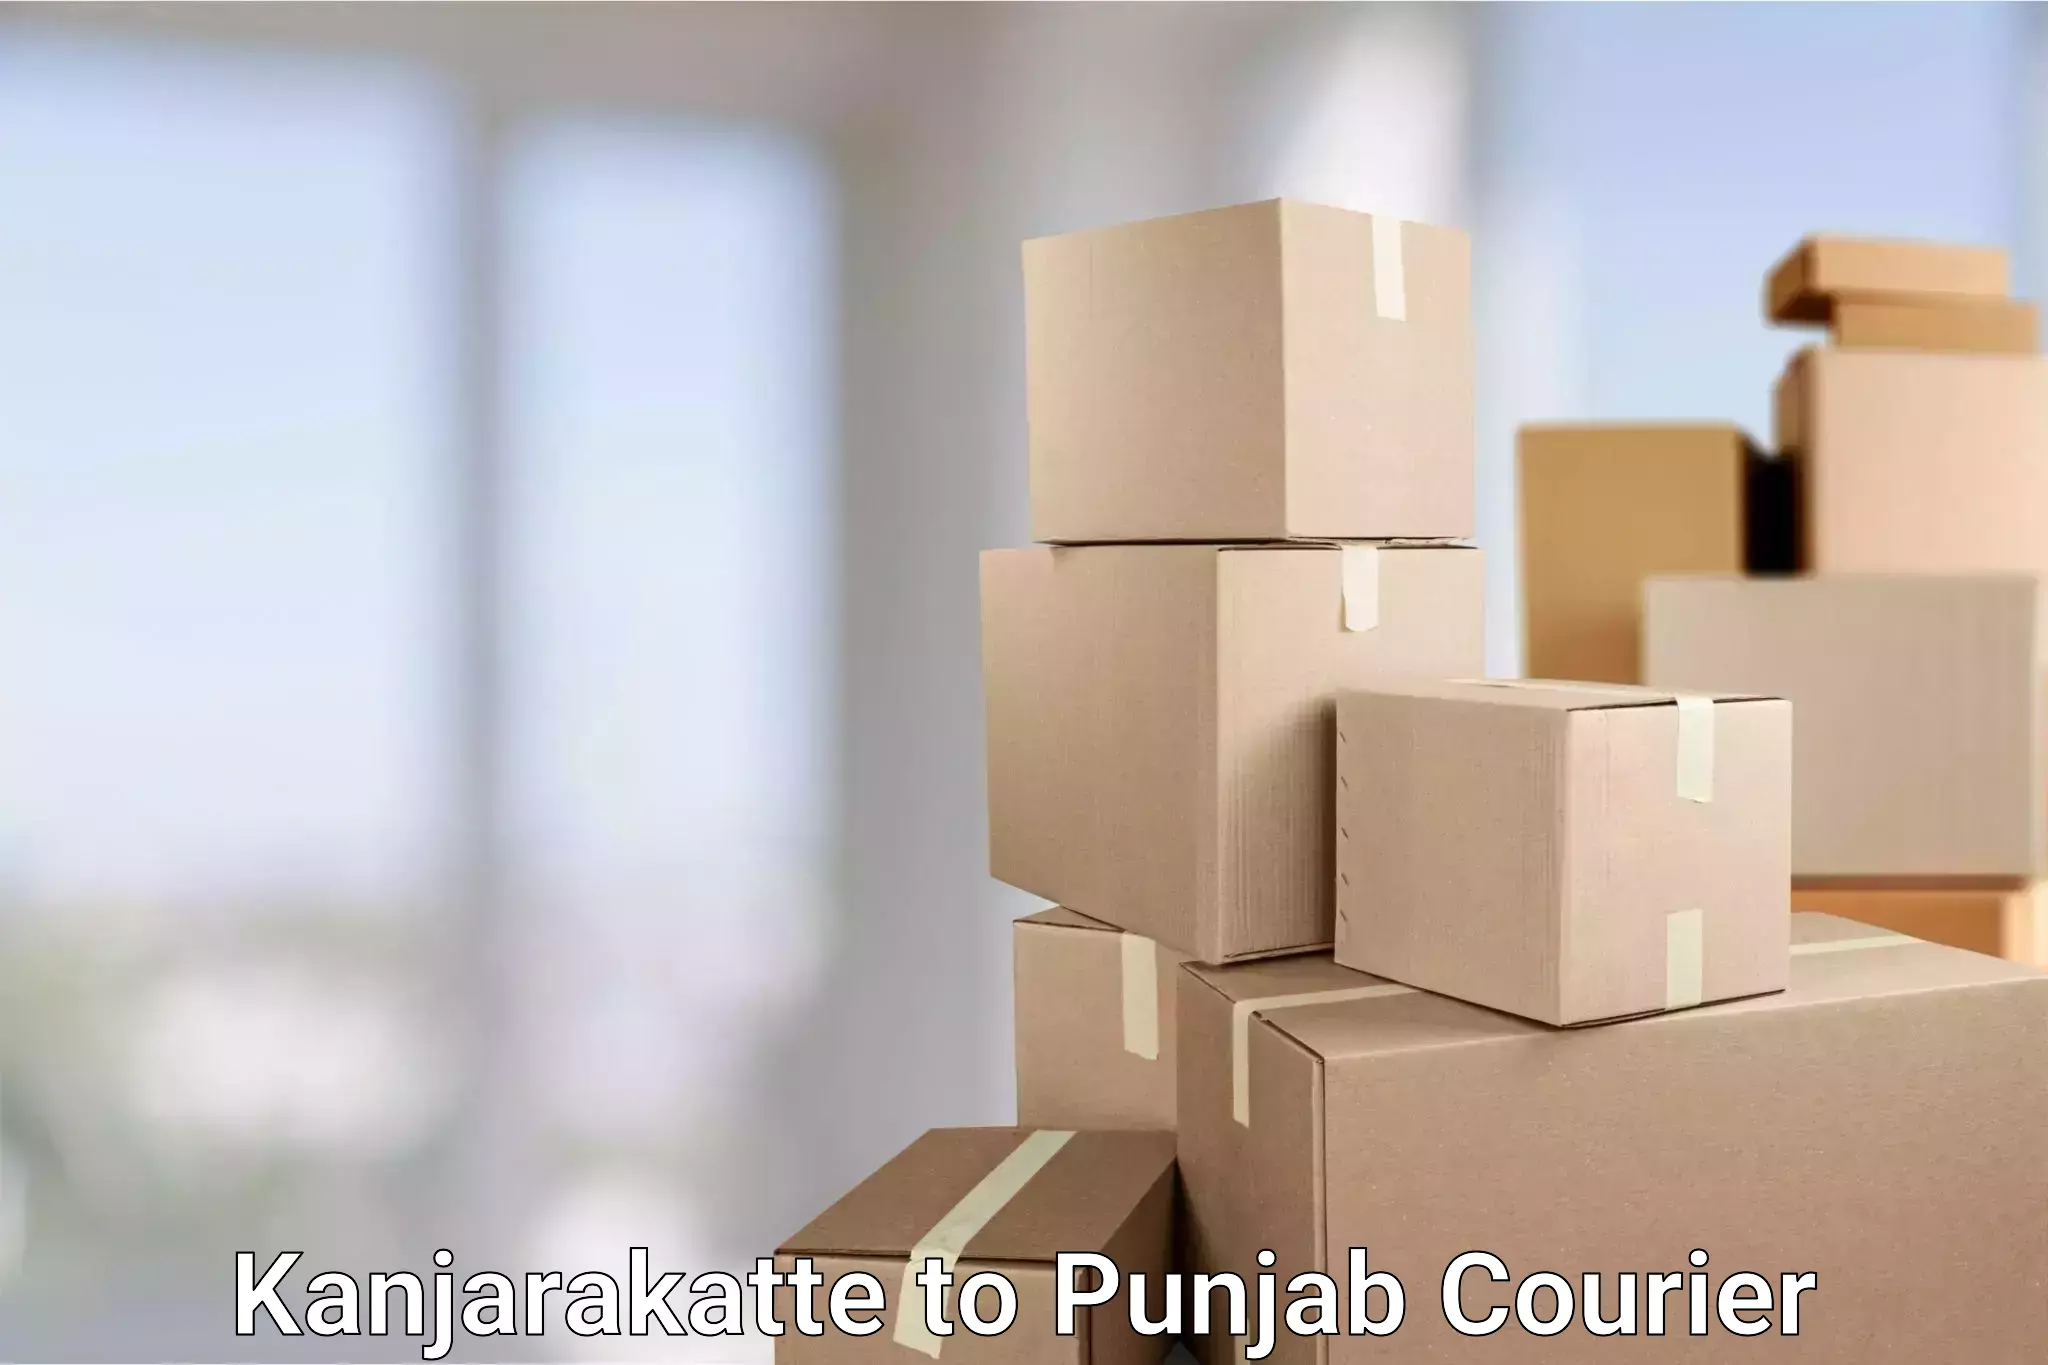 Sustainable courier practices Kanjarakatte to Punjab